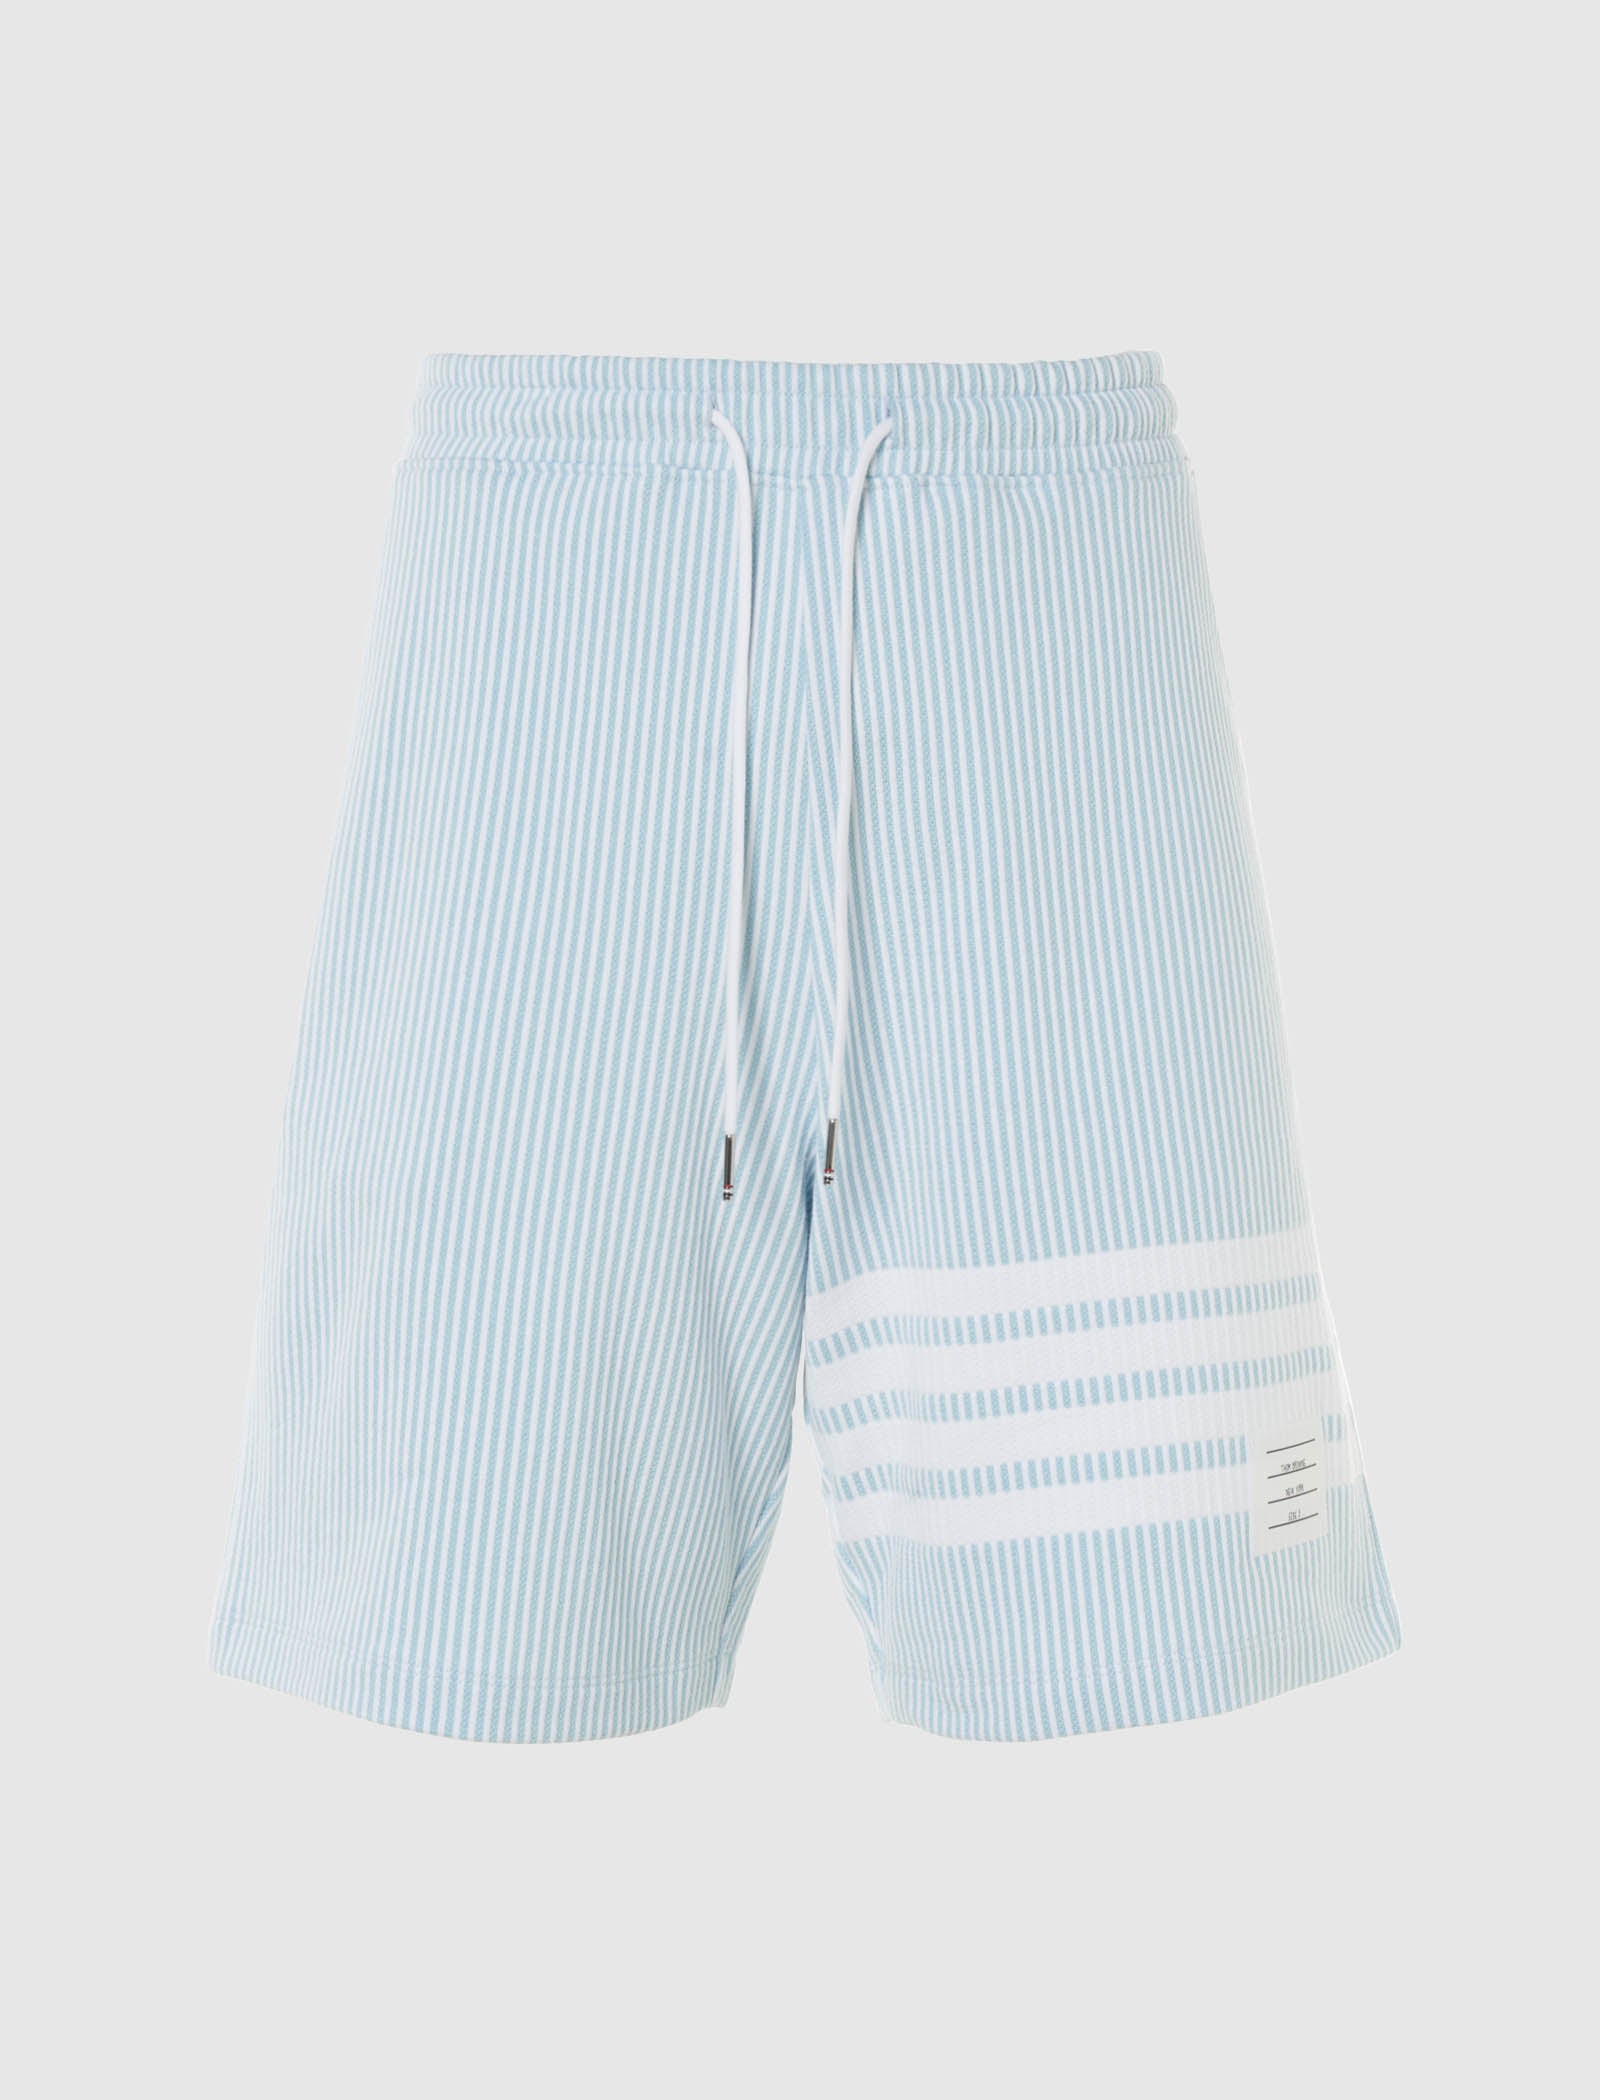 Thom Browne striped seersucker shorts - Grey